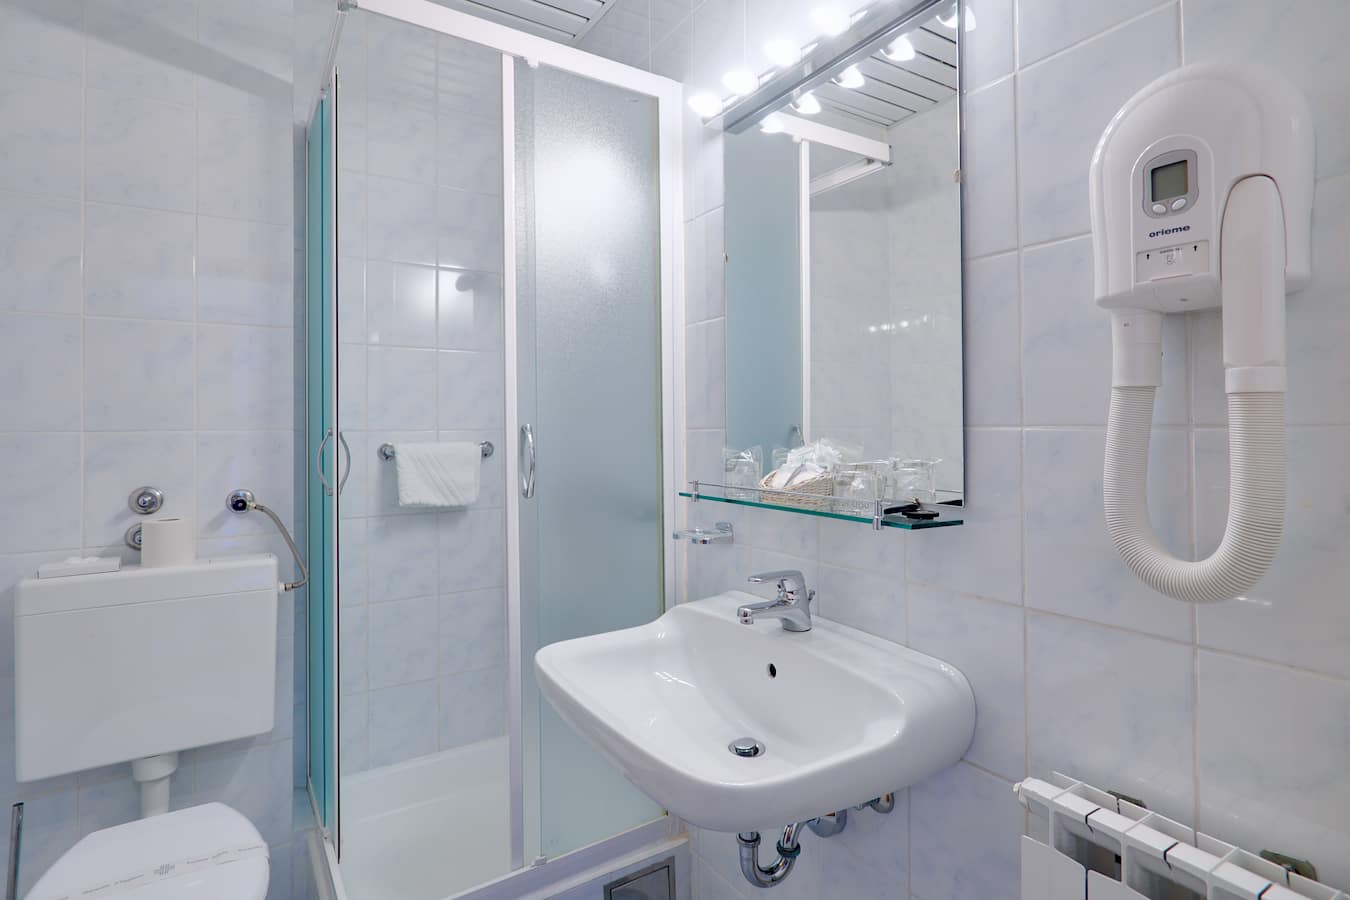 komodor-hotel-rooms-bathroom-shower_1_2.jpg